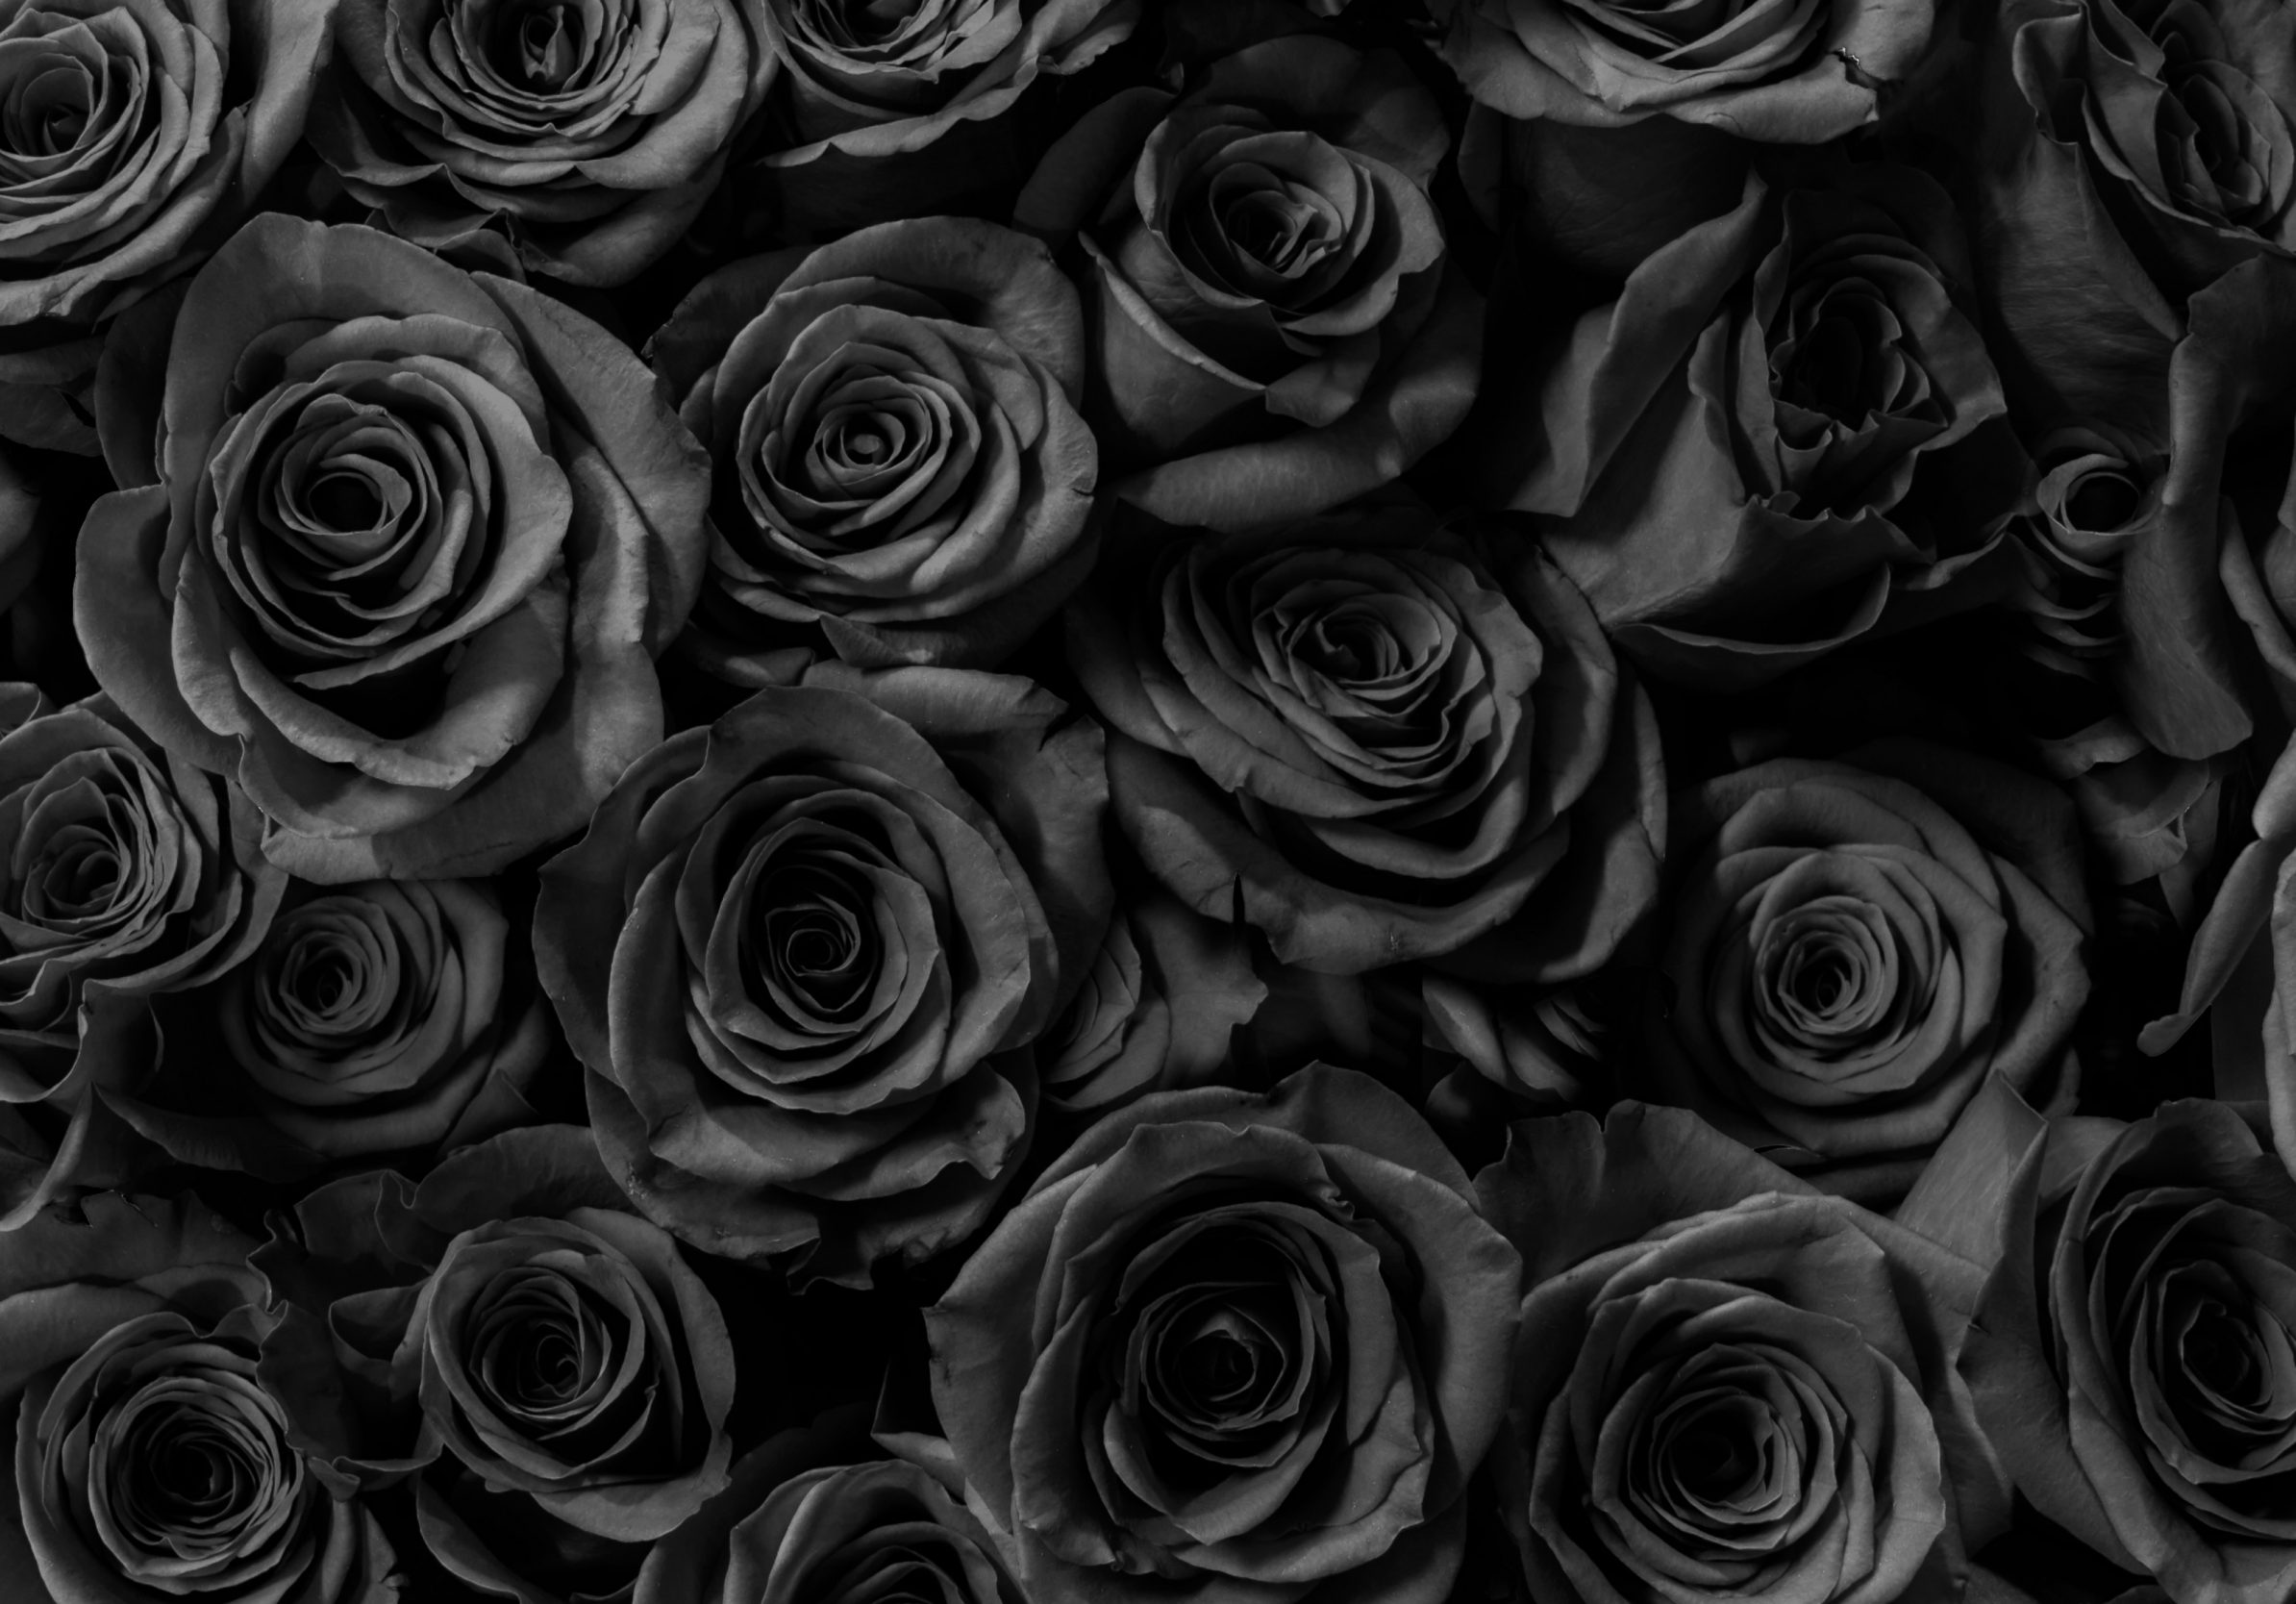 2388x1668 iPad Pro wallpapers Black Roses Gift Anniversary iPad Wallpaper 2388x1668 pixels resolution